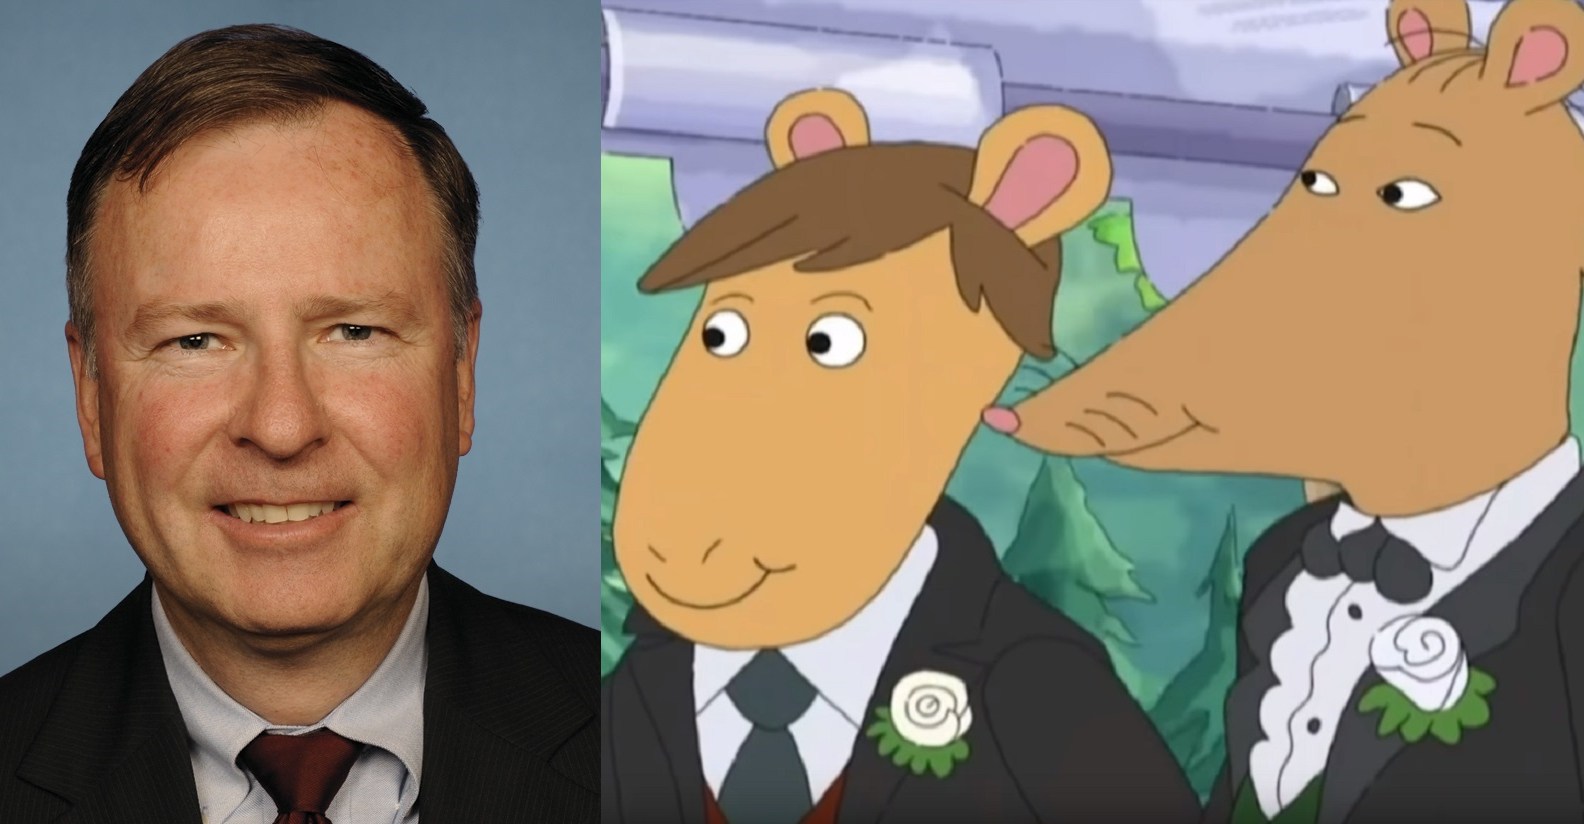 Republican congressman Doug Lamborn is seeking to defund PBS over the Arthur episode